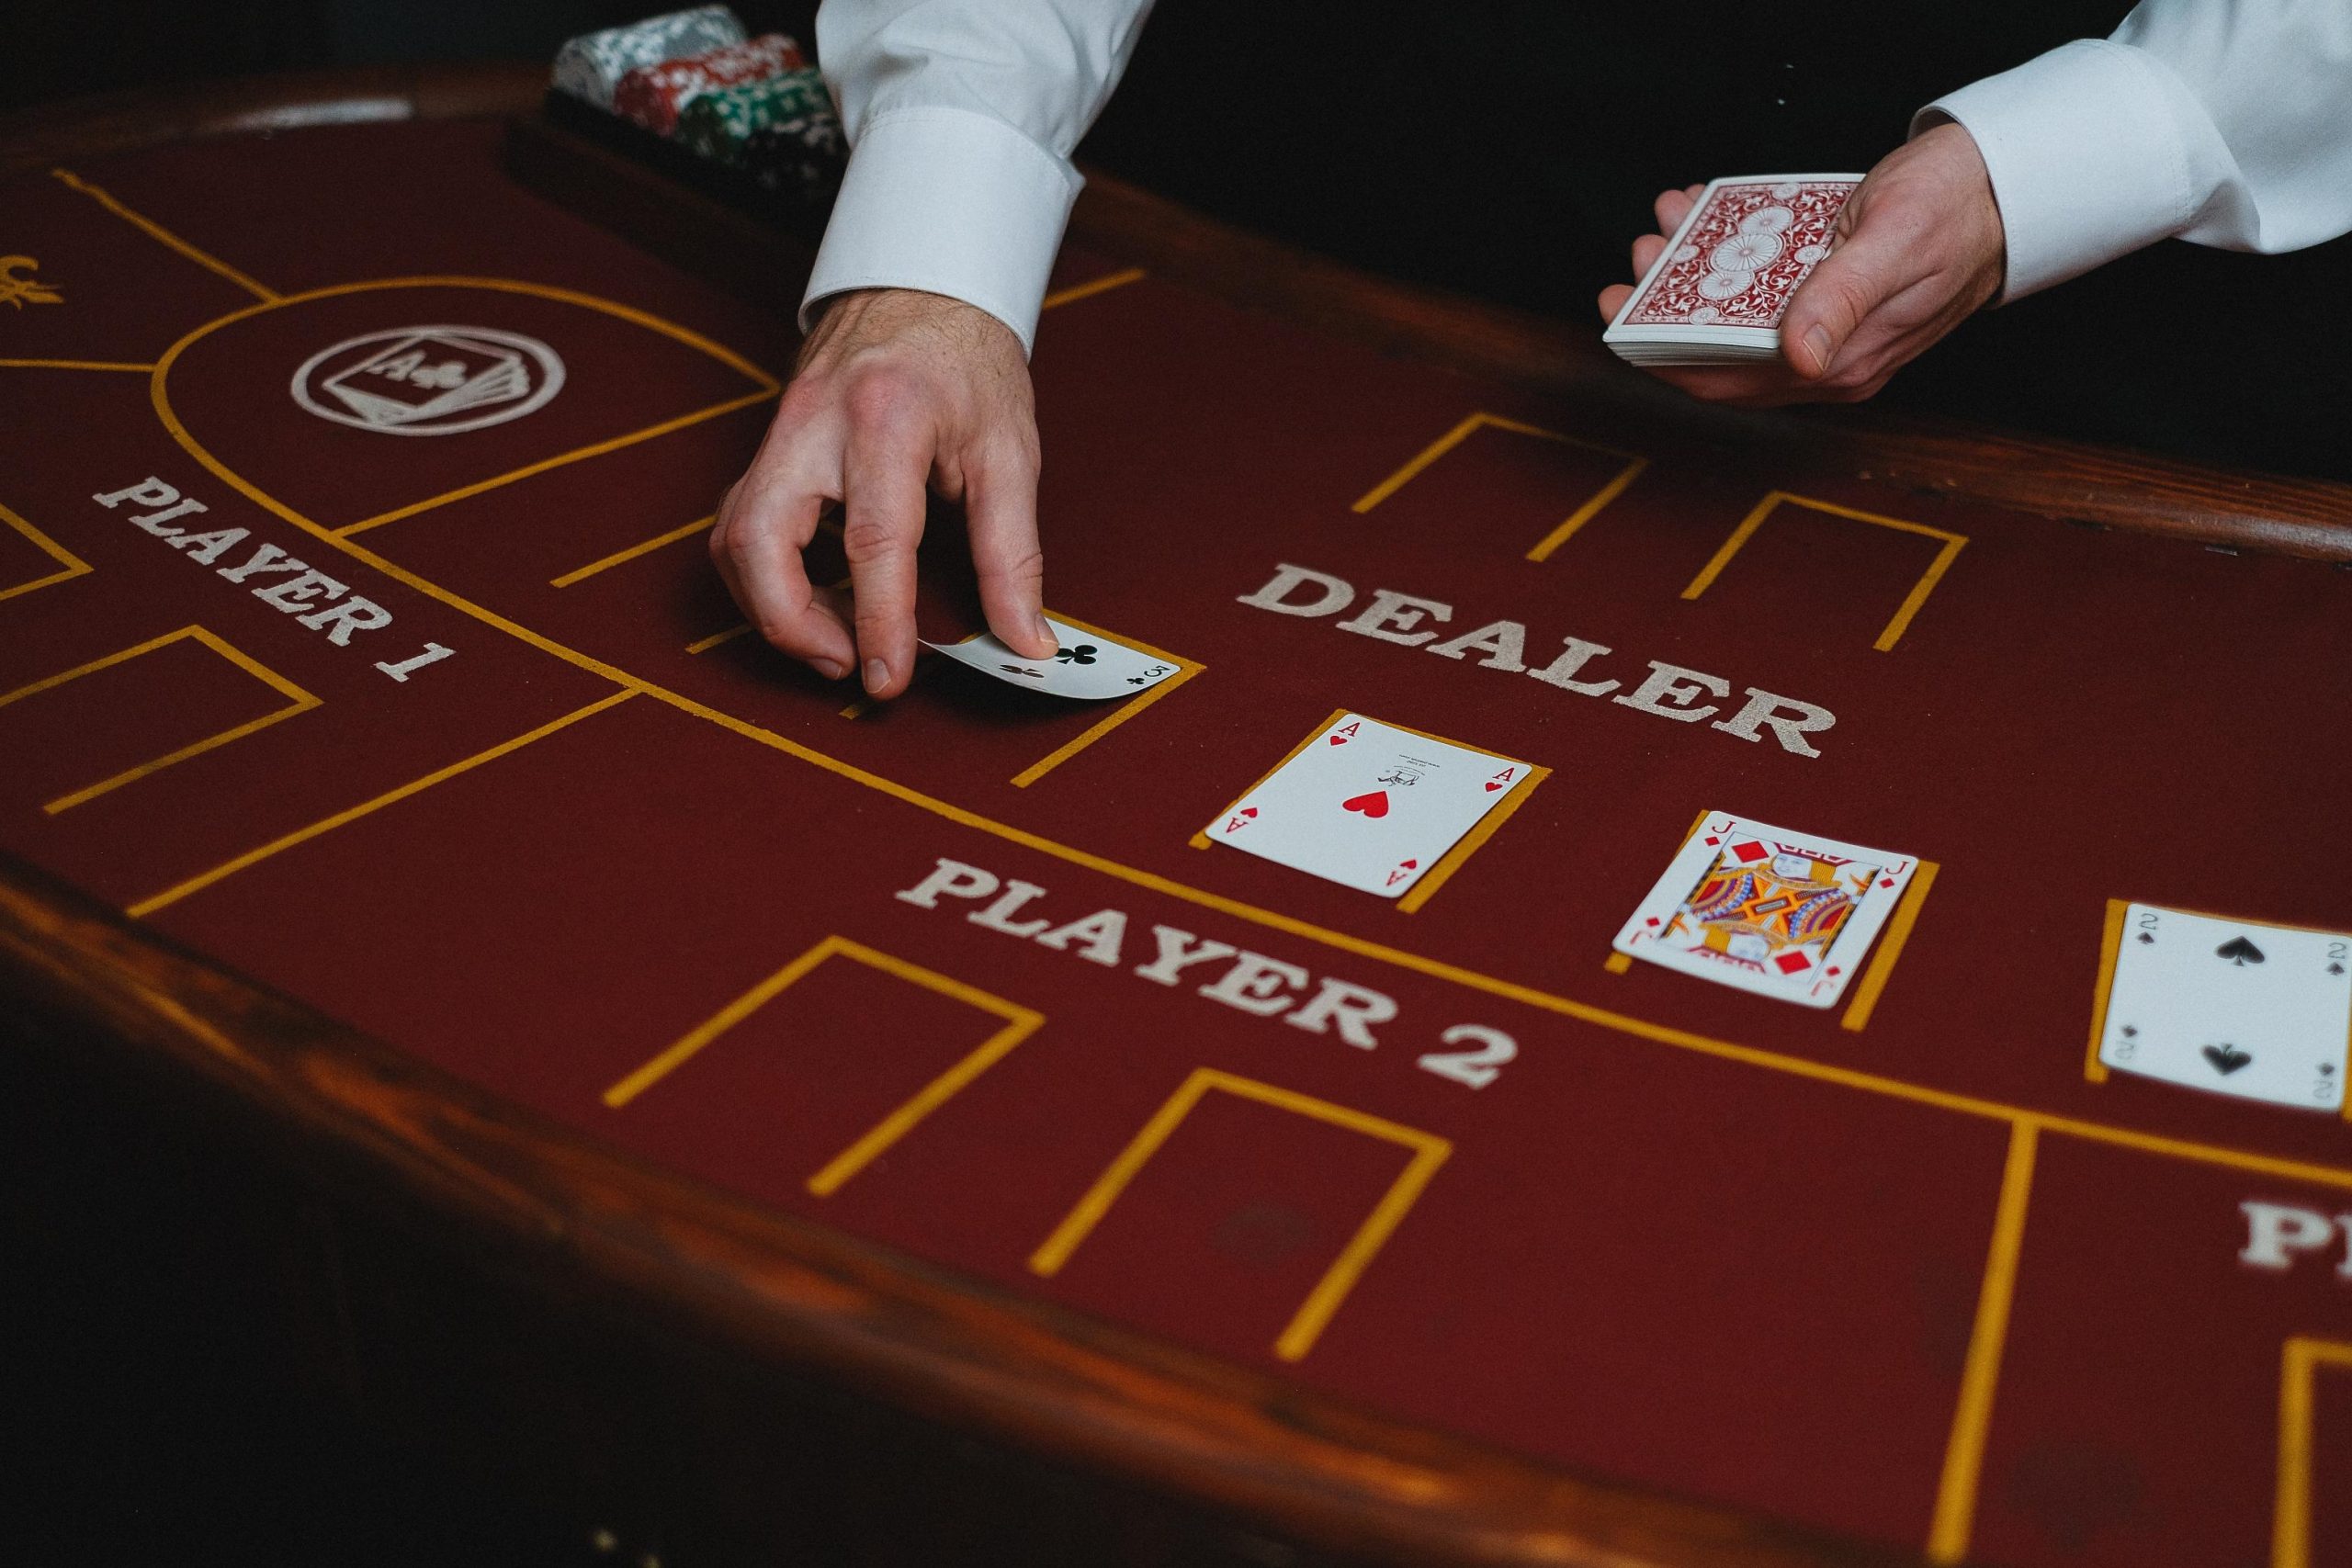 How are blockchain technologies impacting casino operations?